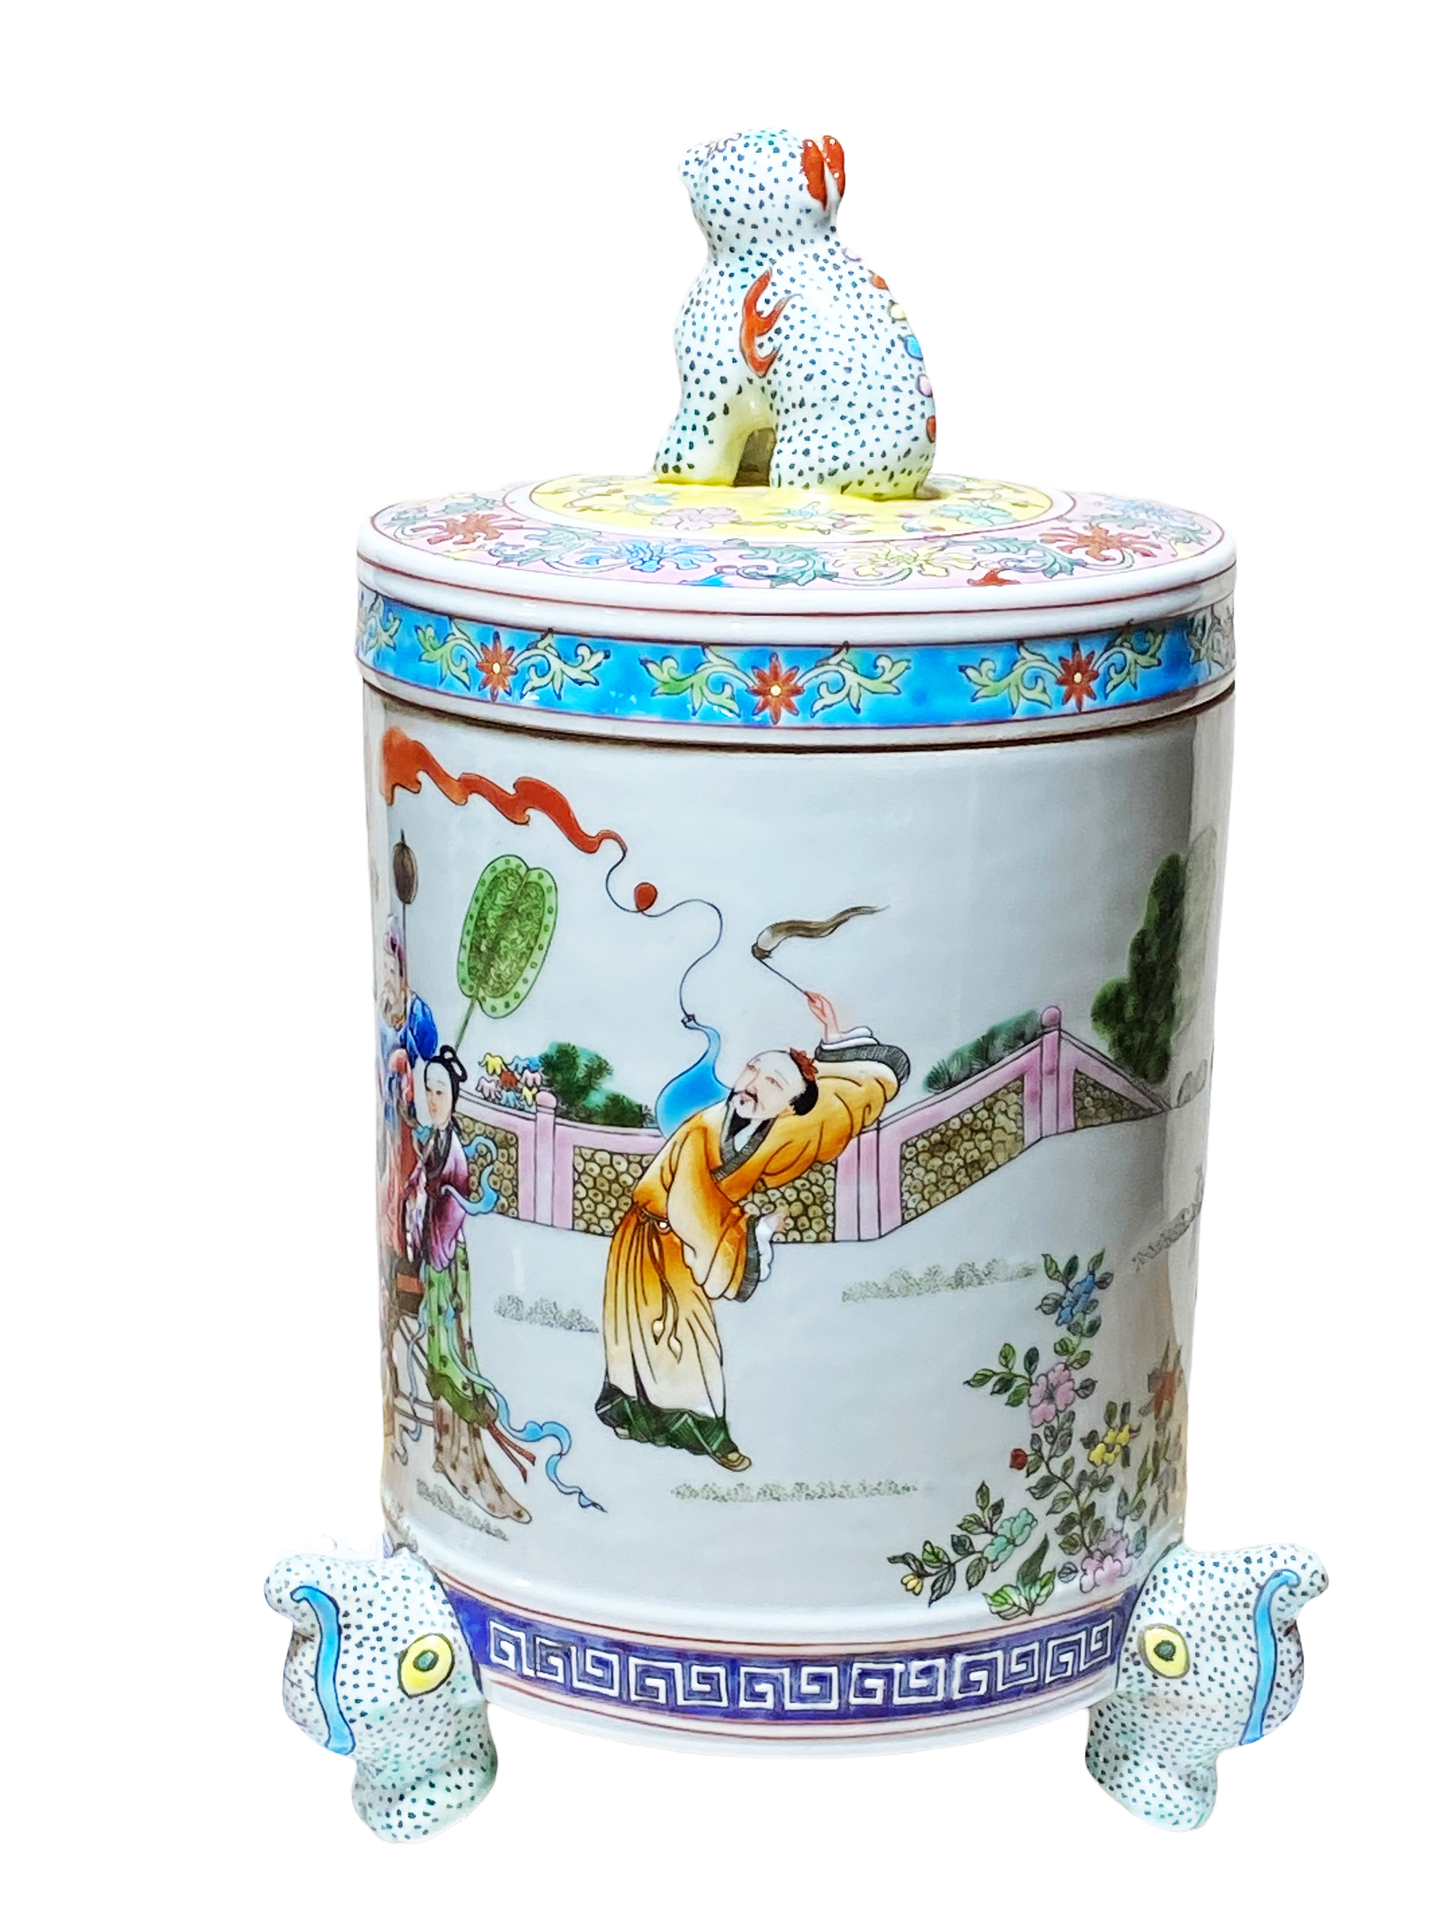 # 4820 Stunning  Chinoiserie Famille Rose Porcelain Tea Canister 13" H